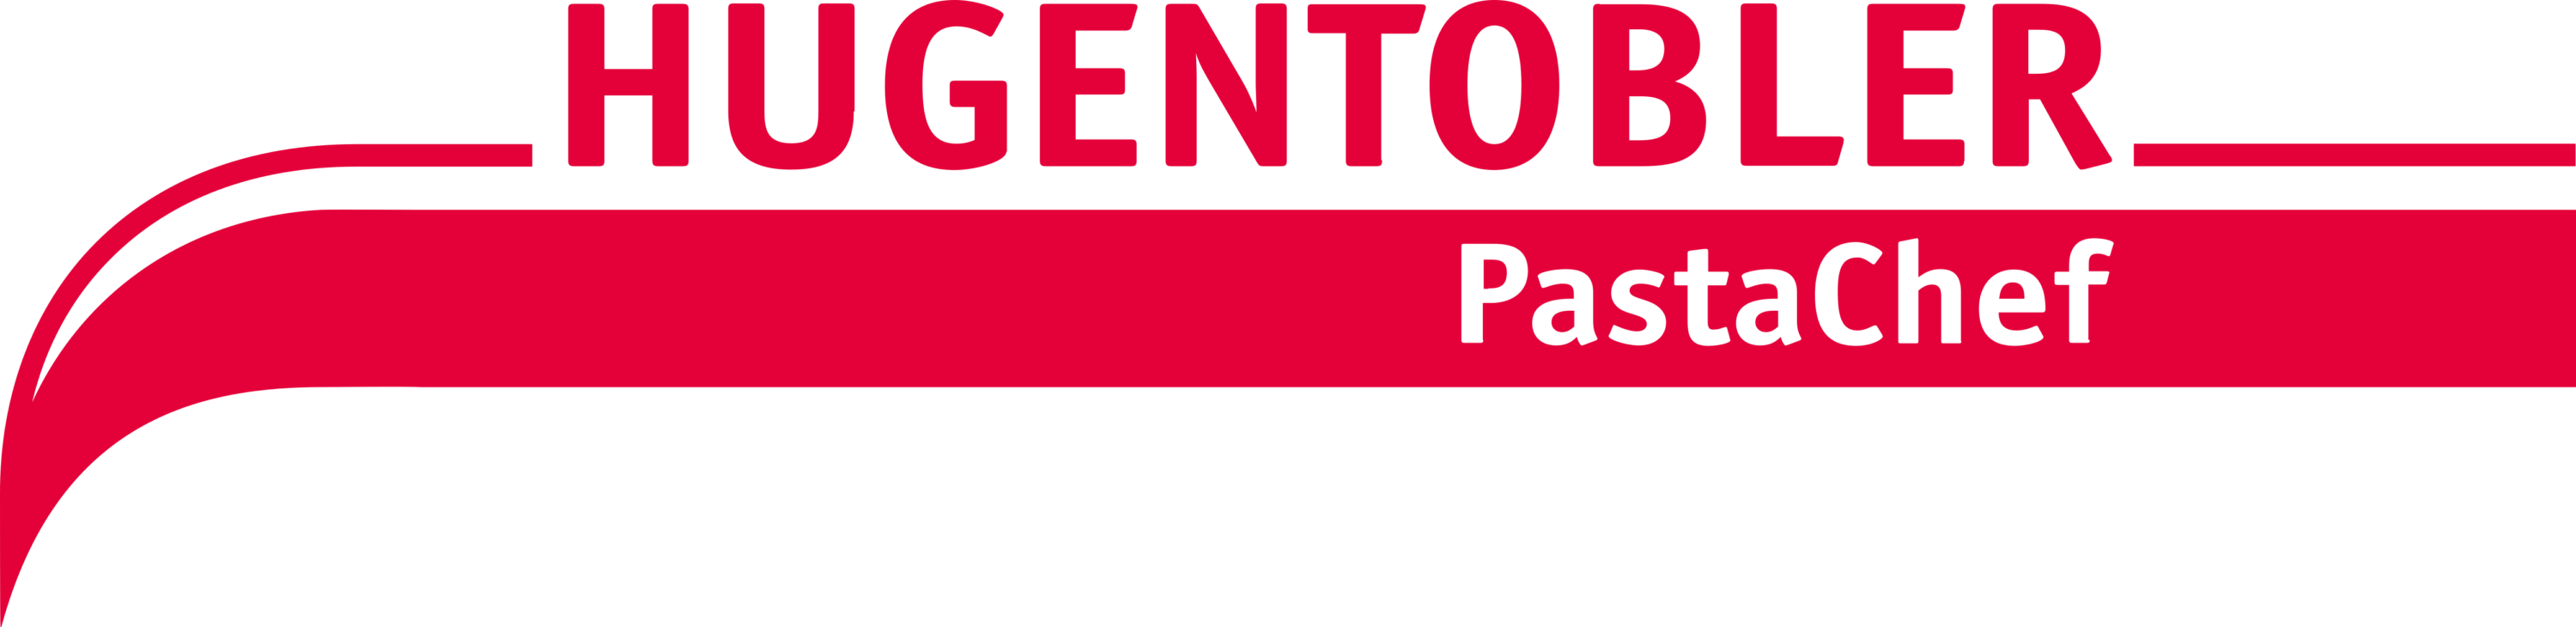 Hugentobler Pastachef Logo